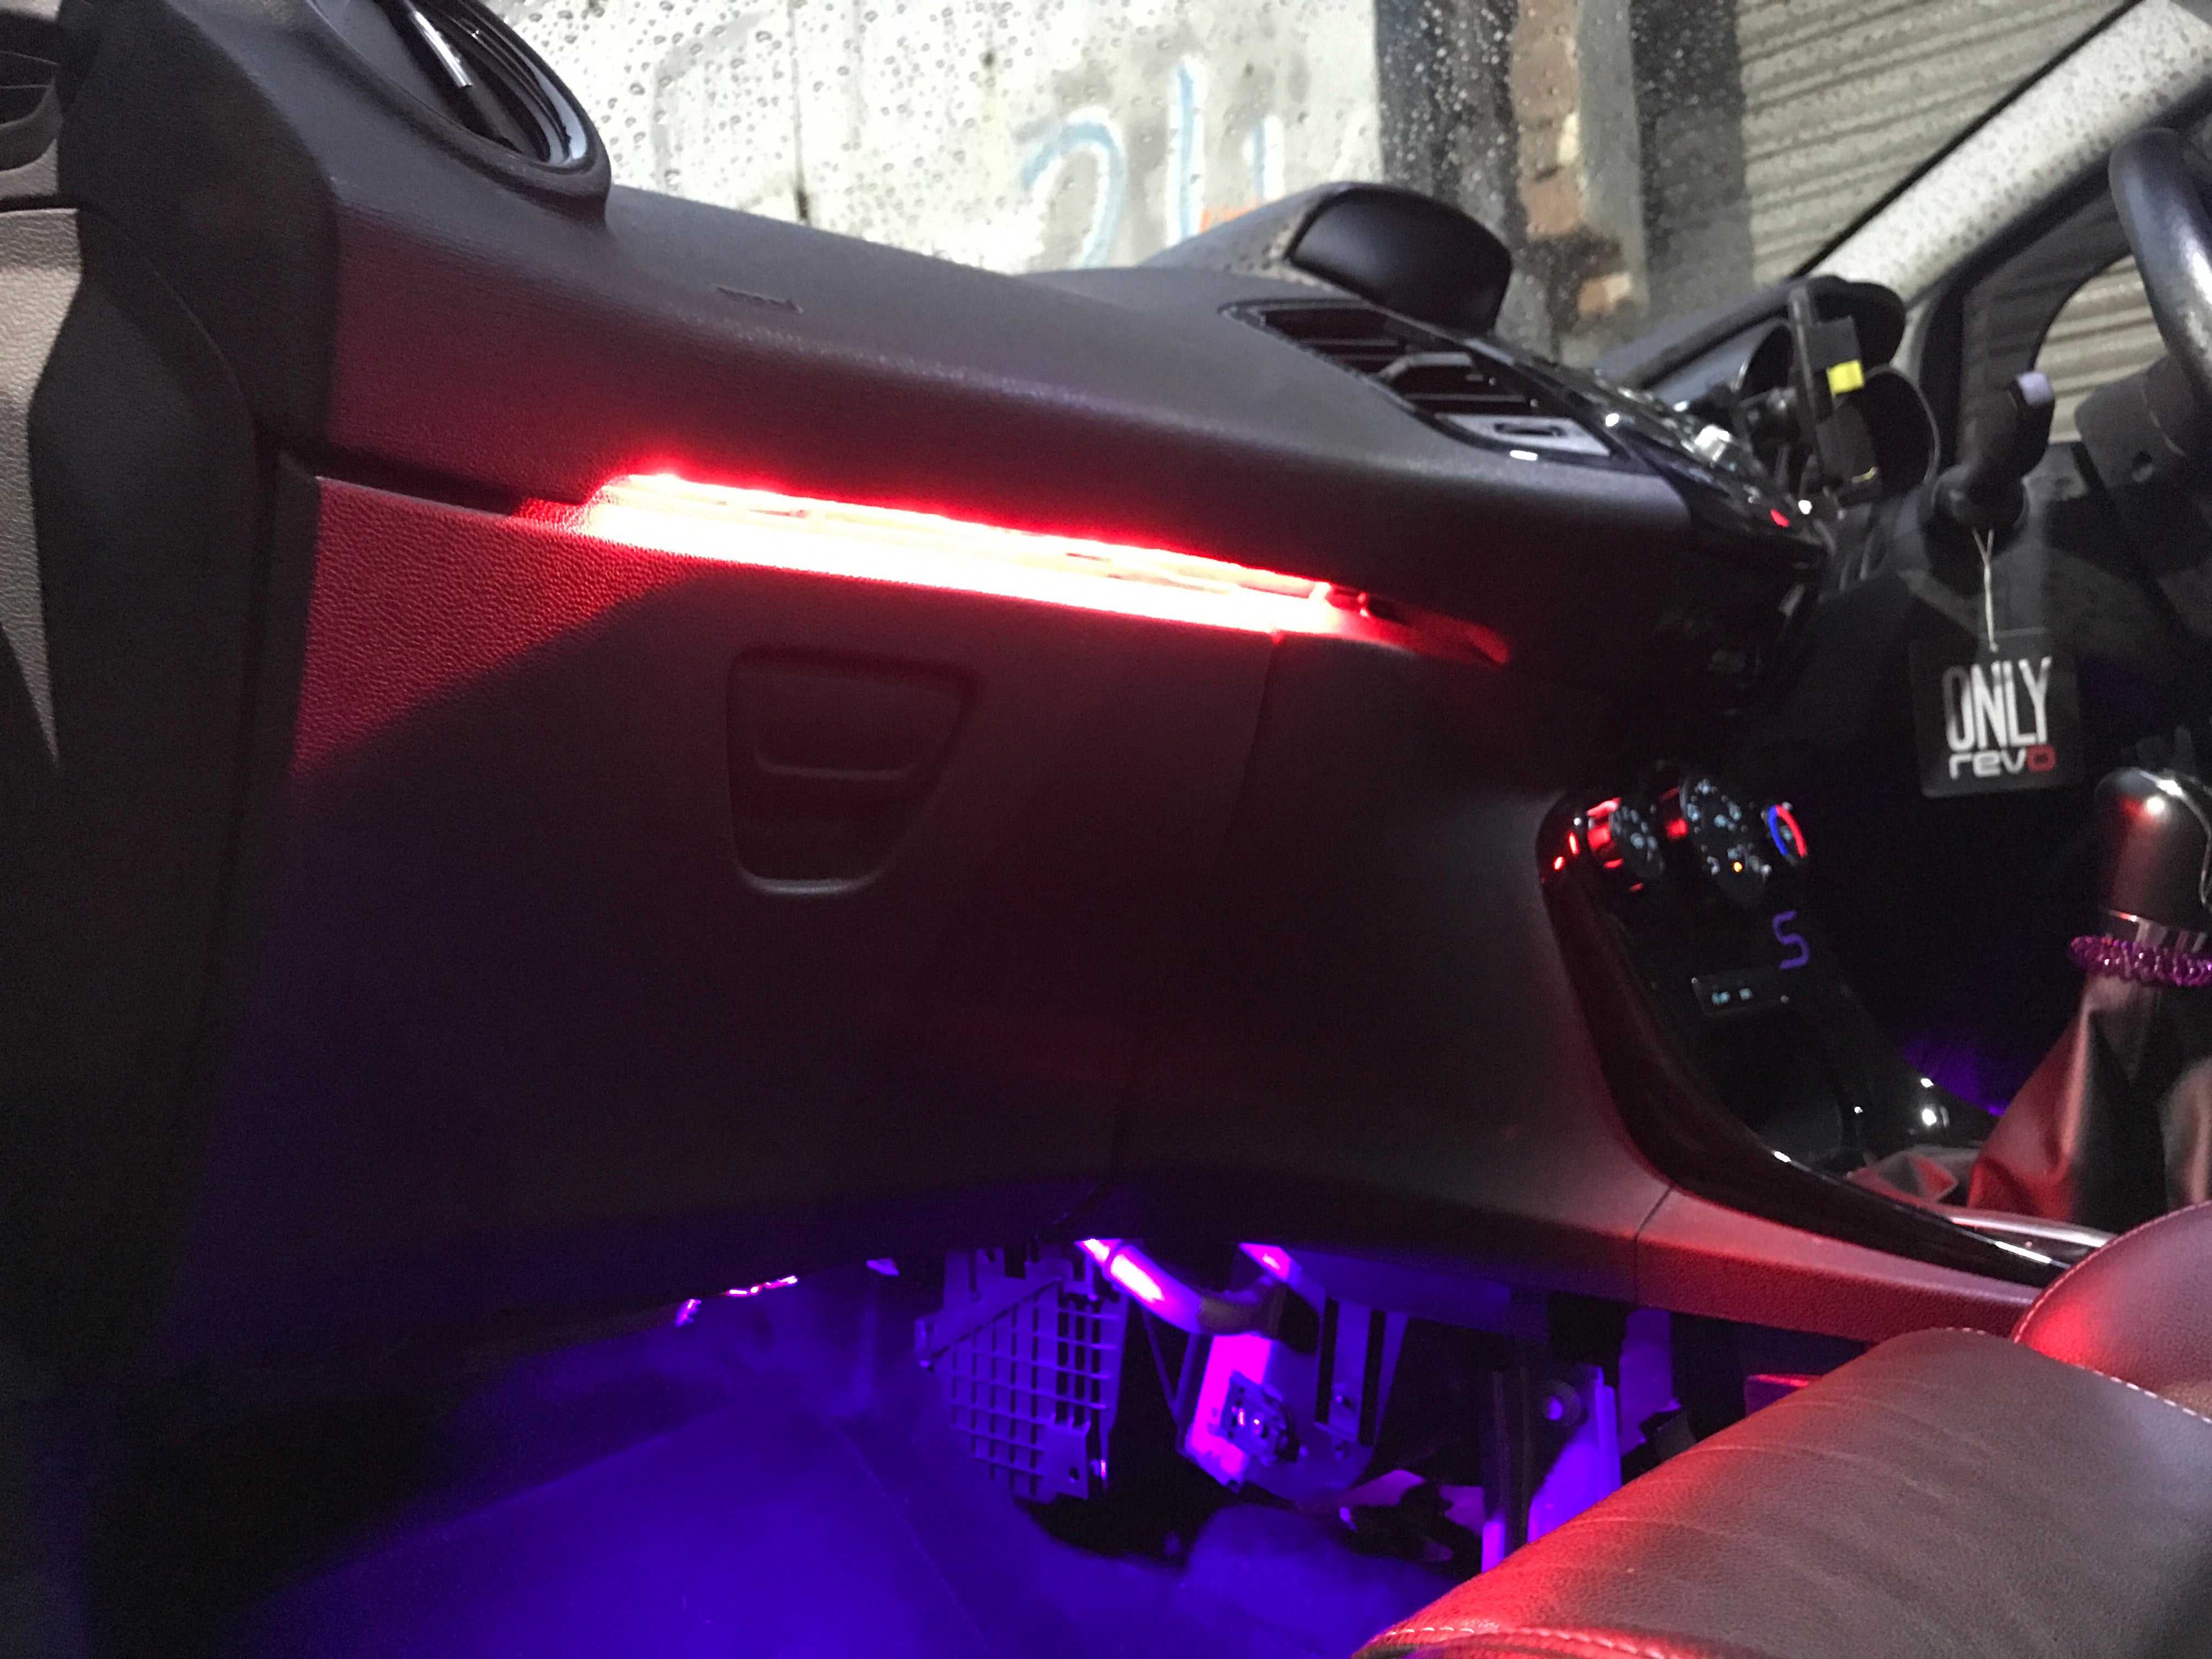 Car Enhancements UK, #Enhanced Edition Glove Box Strip Light